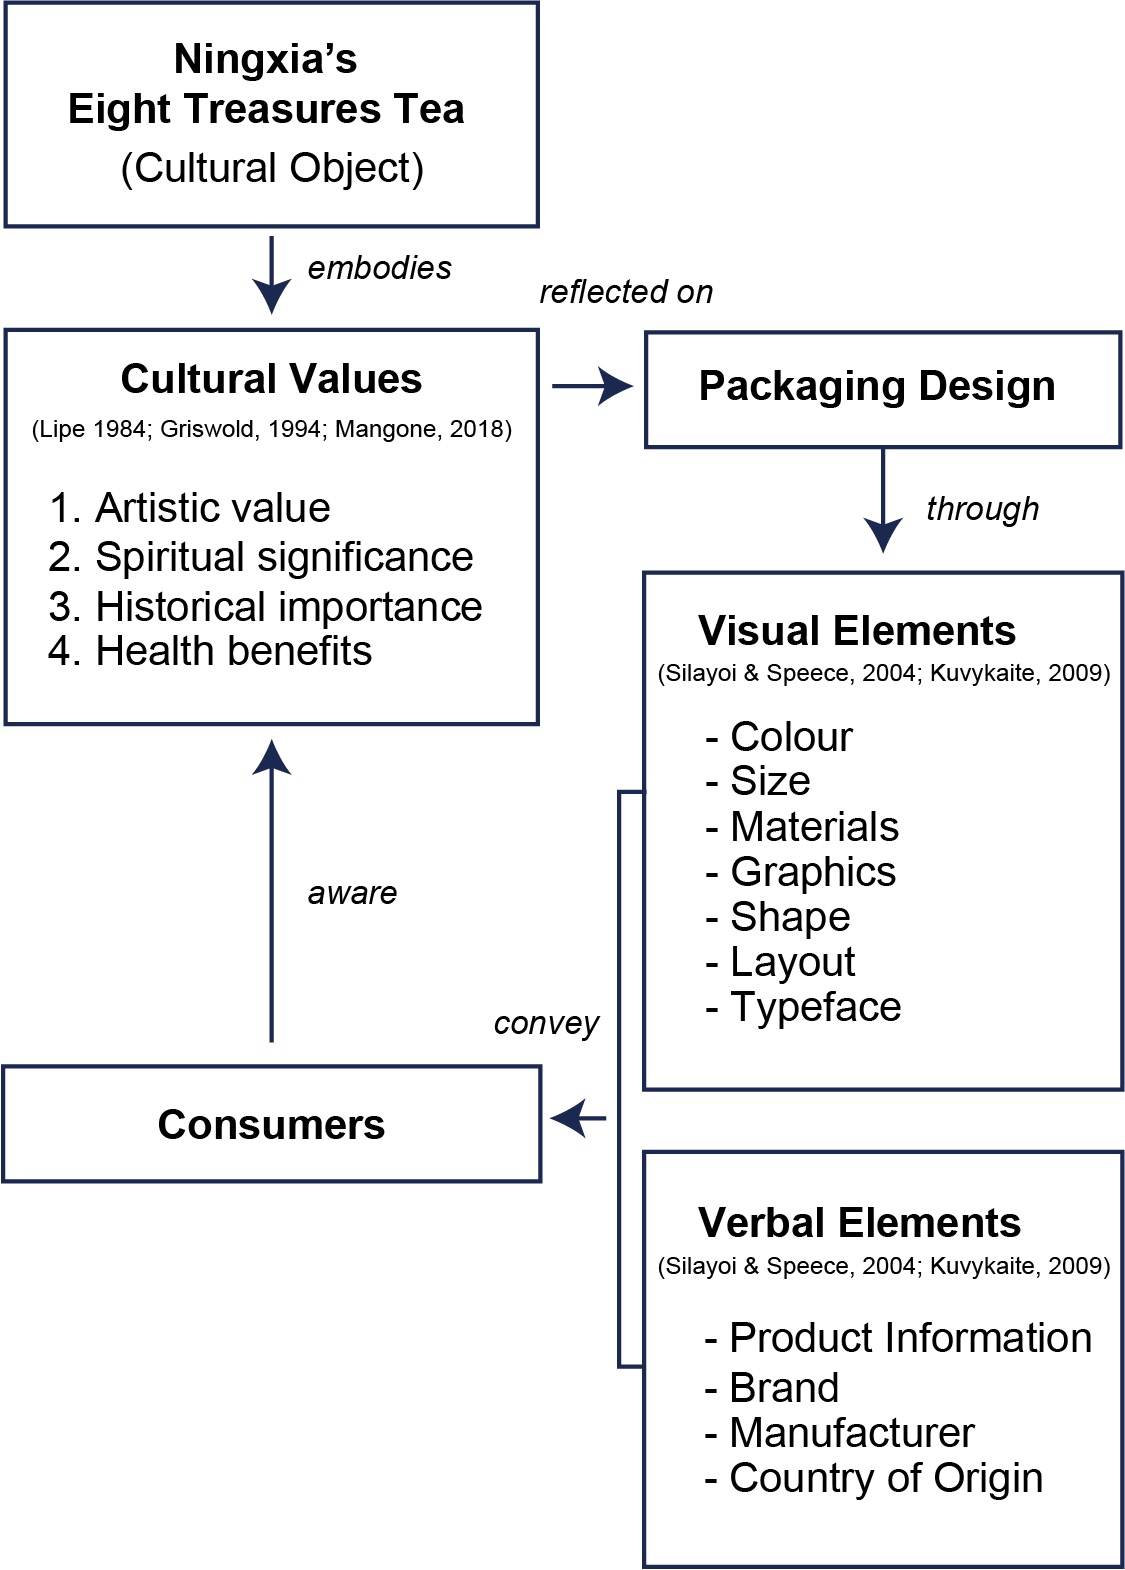 Conveying Ningxia’s 8 Treasures Tea Cultural Values through Packaging Design: A Conceptual Framework